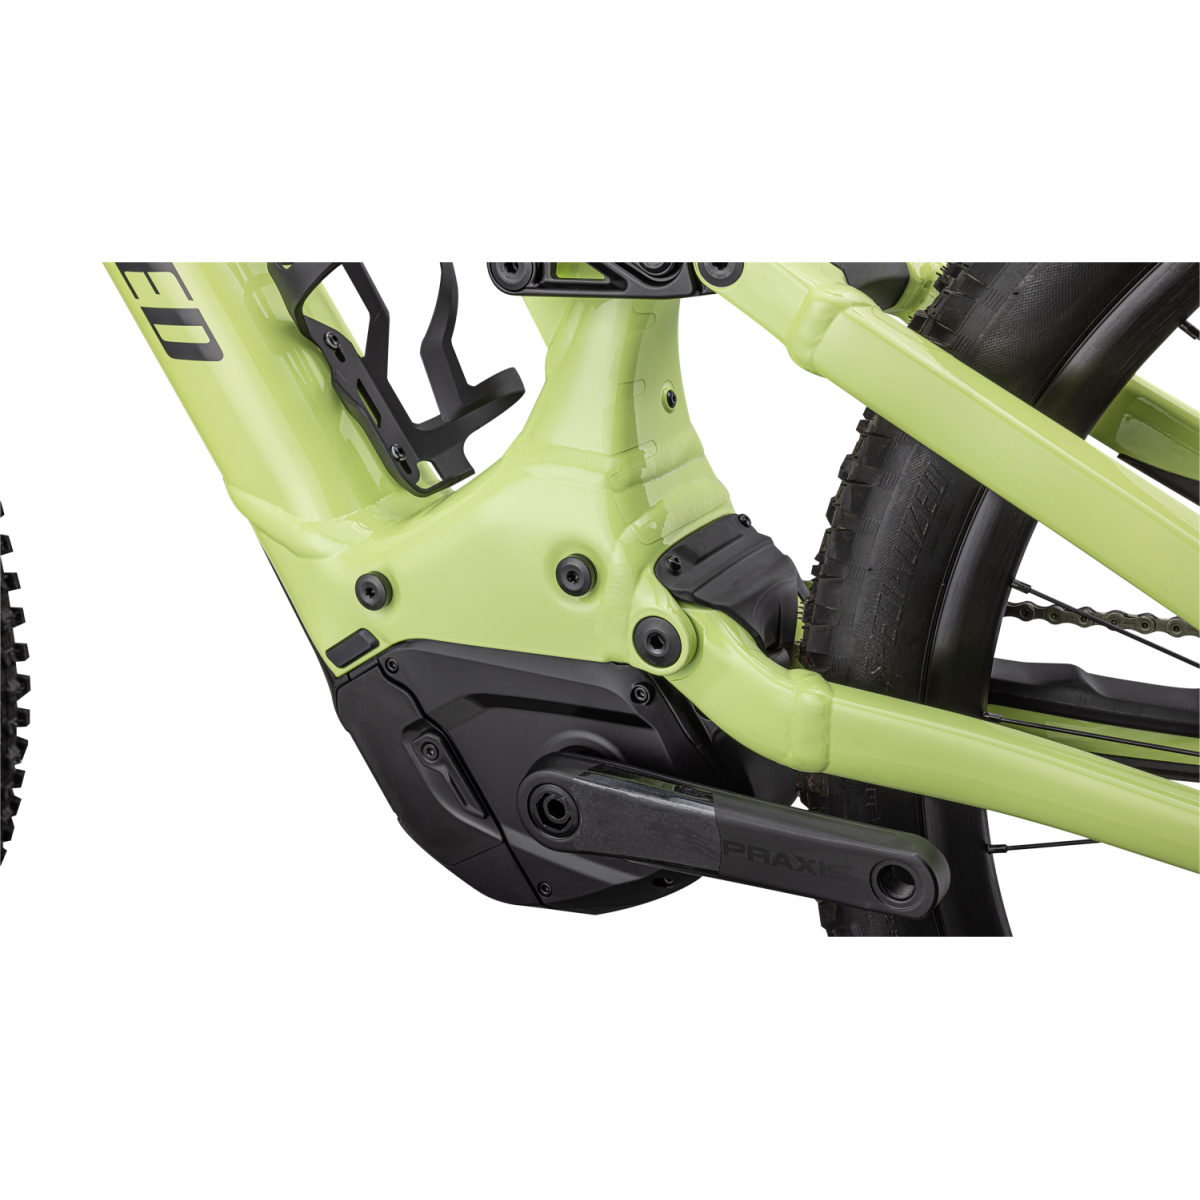 Specialized Turbo Levo Alloy elektrinis dviratis / Gloss Limestone